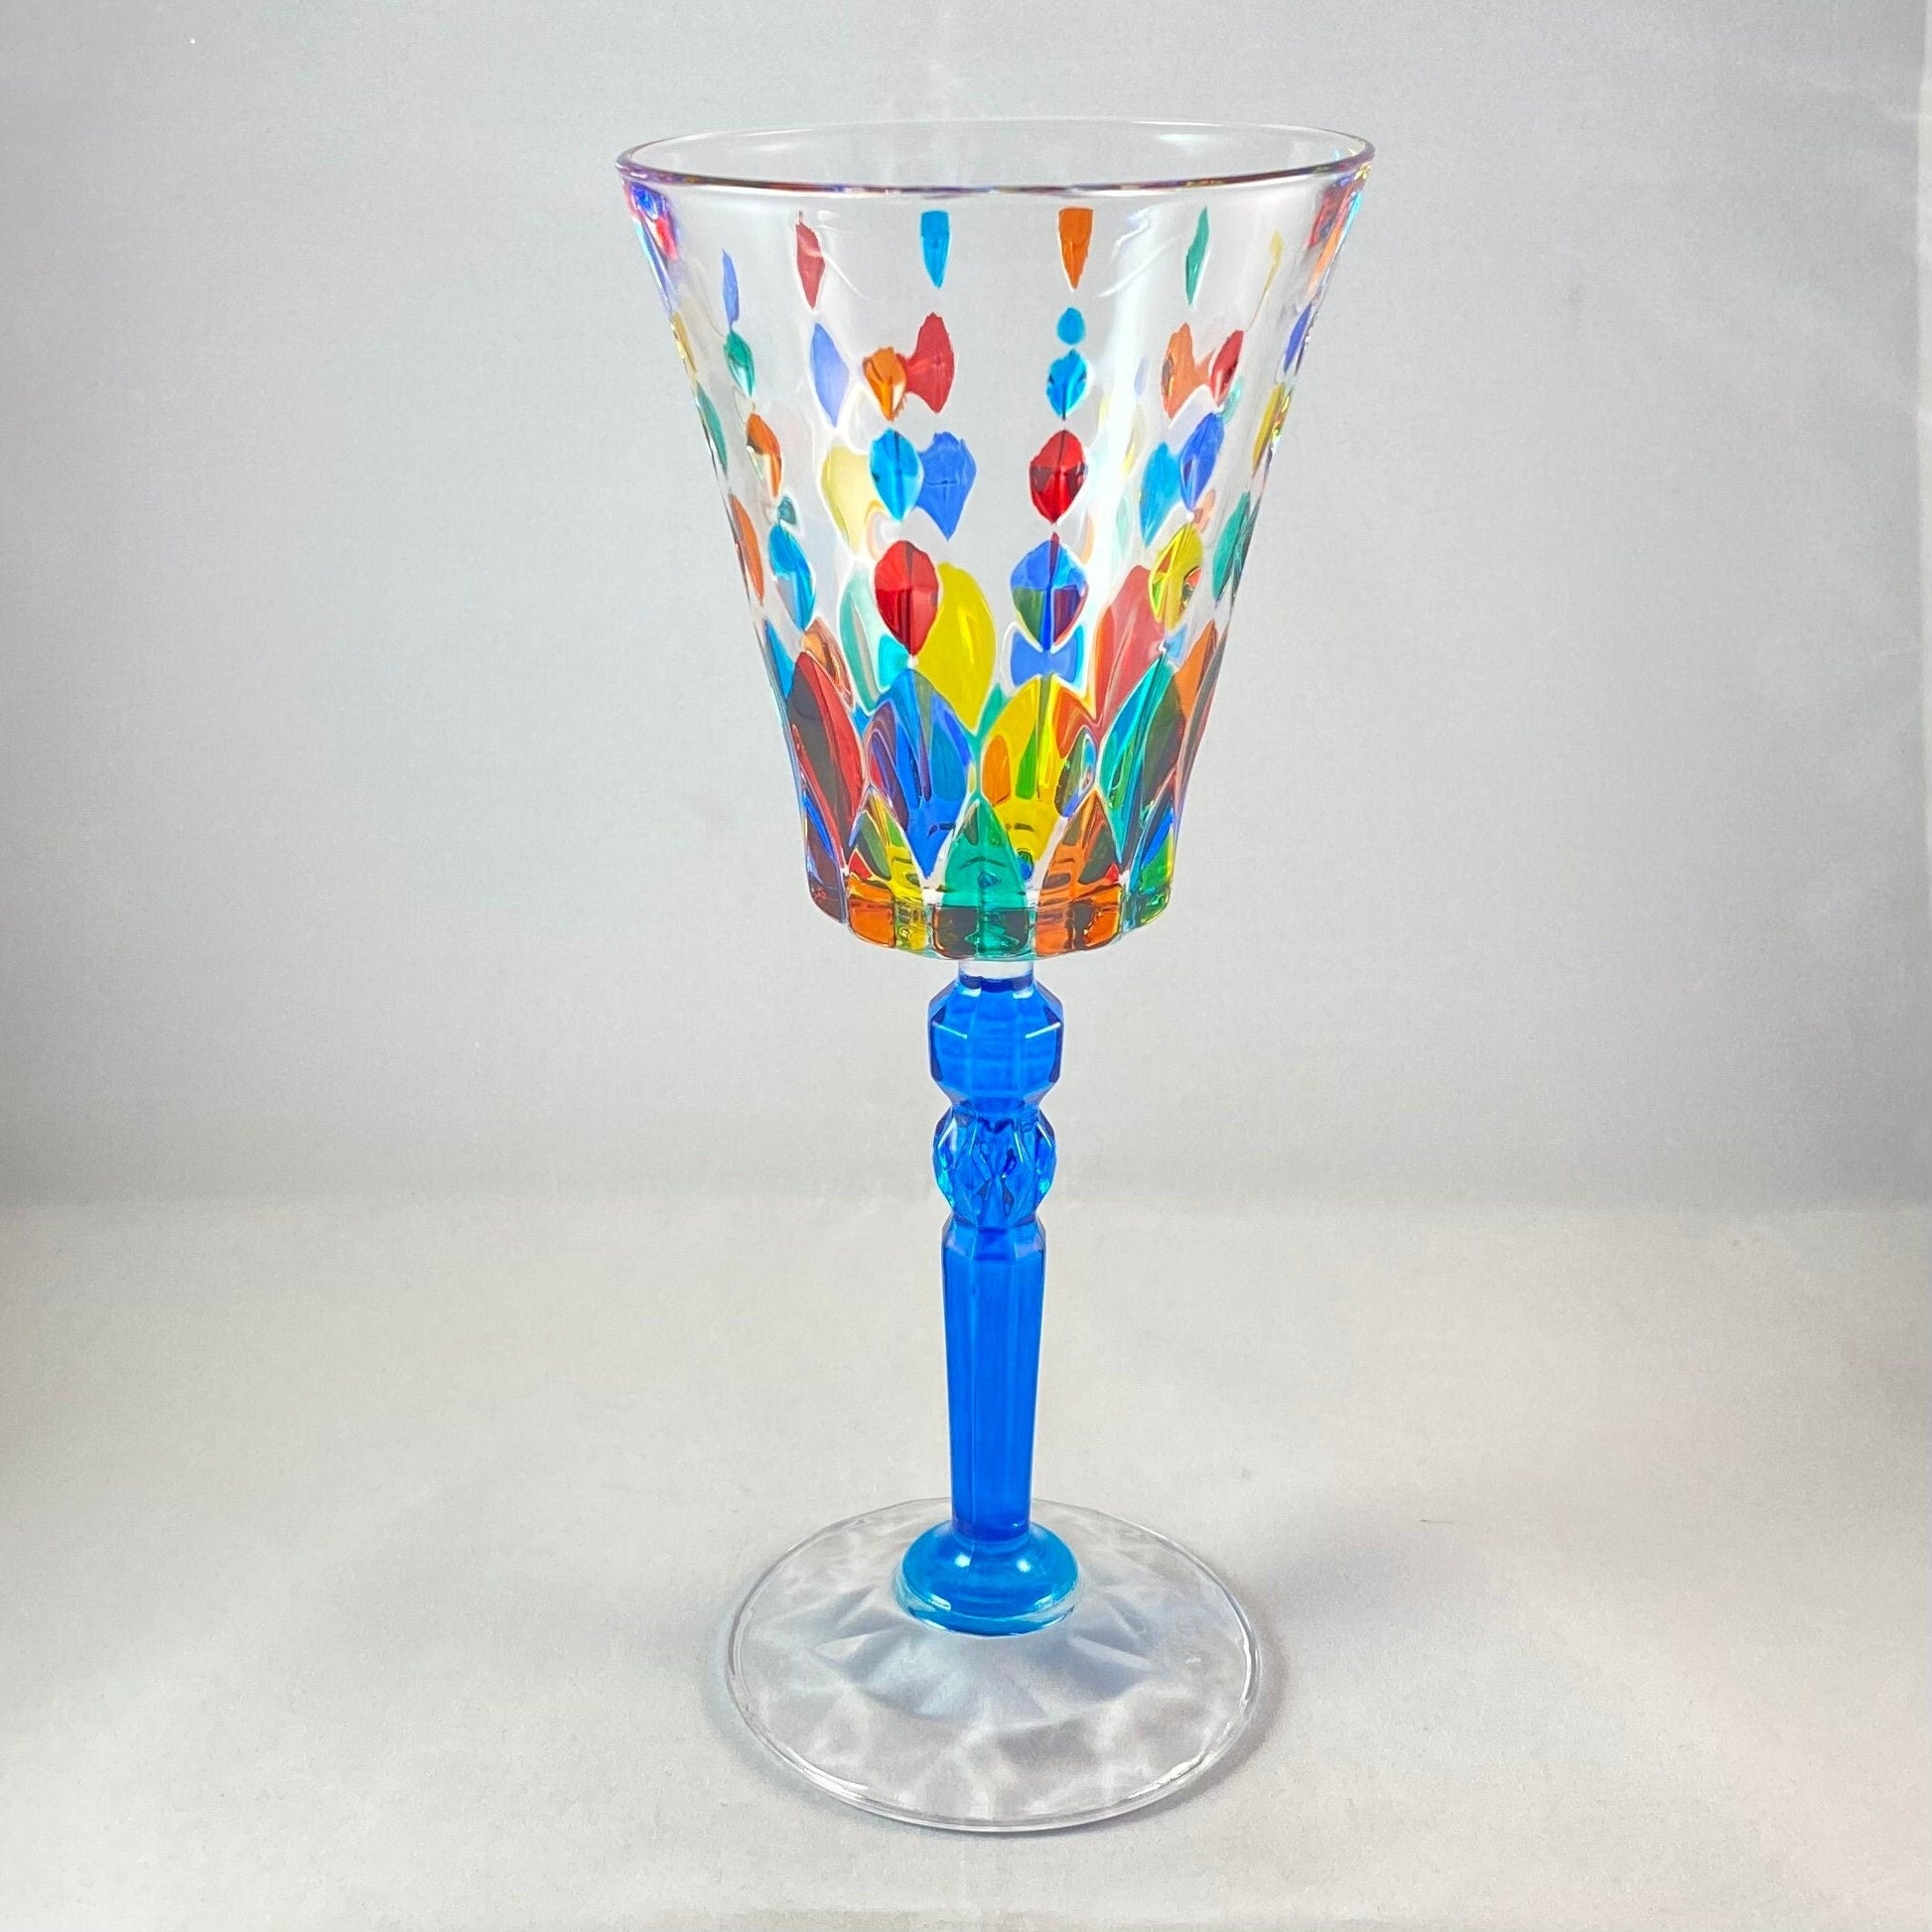 Aqua Blue Stem Marilyn Venetian Glass Wine Glass - Handmade in Italy, Colorful Murano Glass